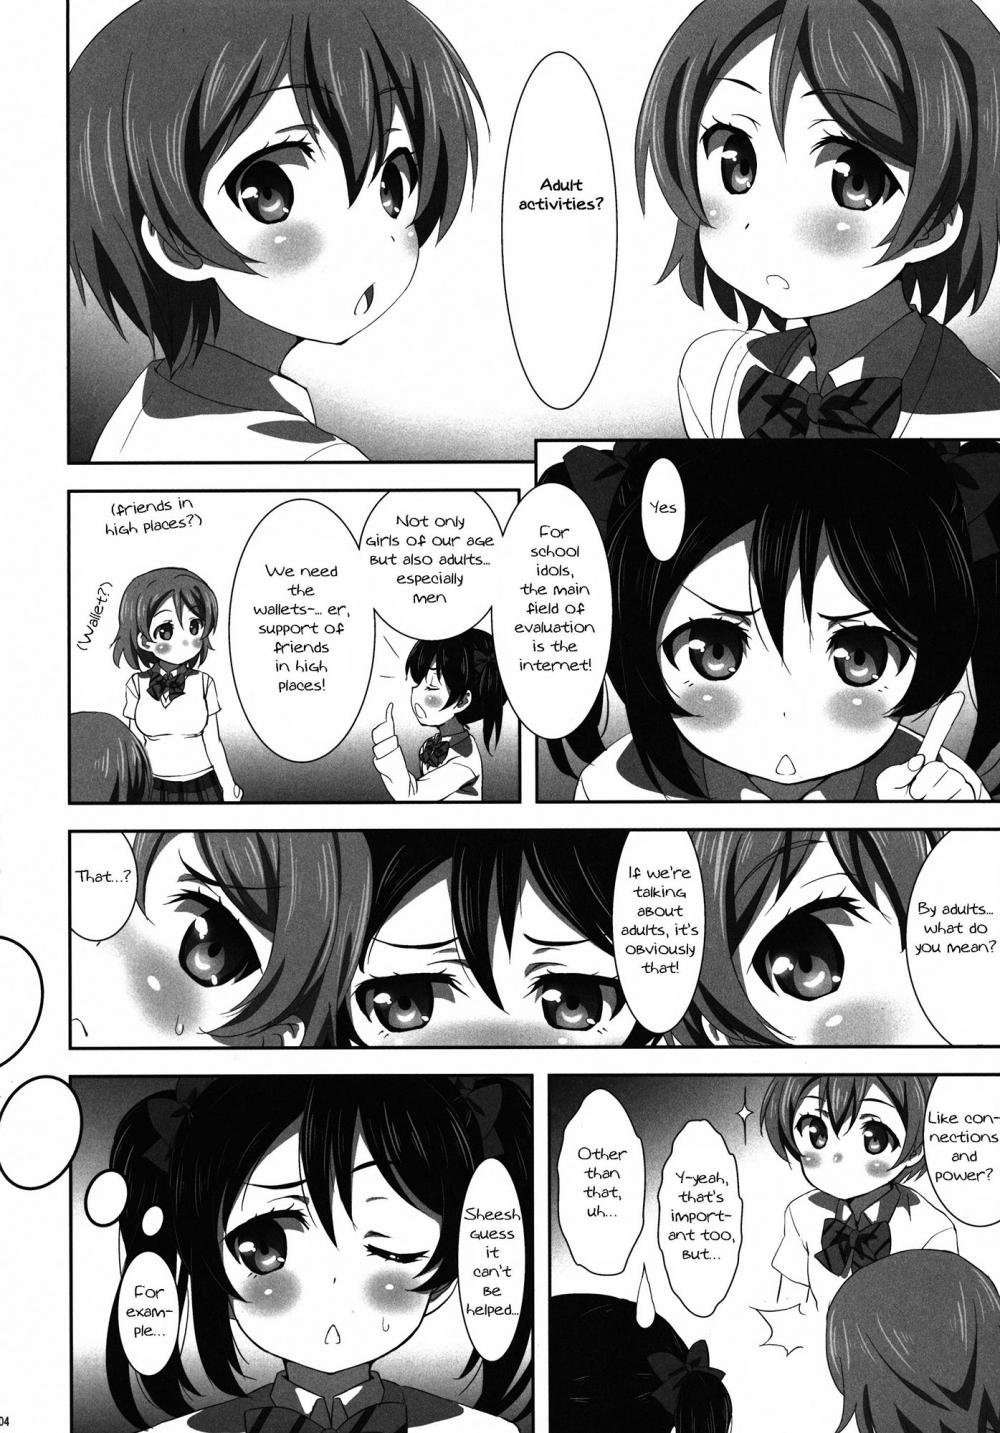 Hentai Manga Comic-Nicos Adult Activities-Read-2